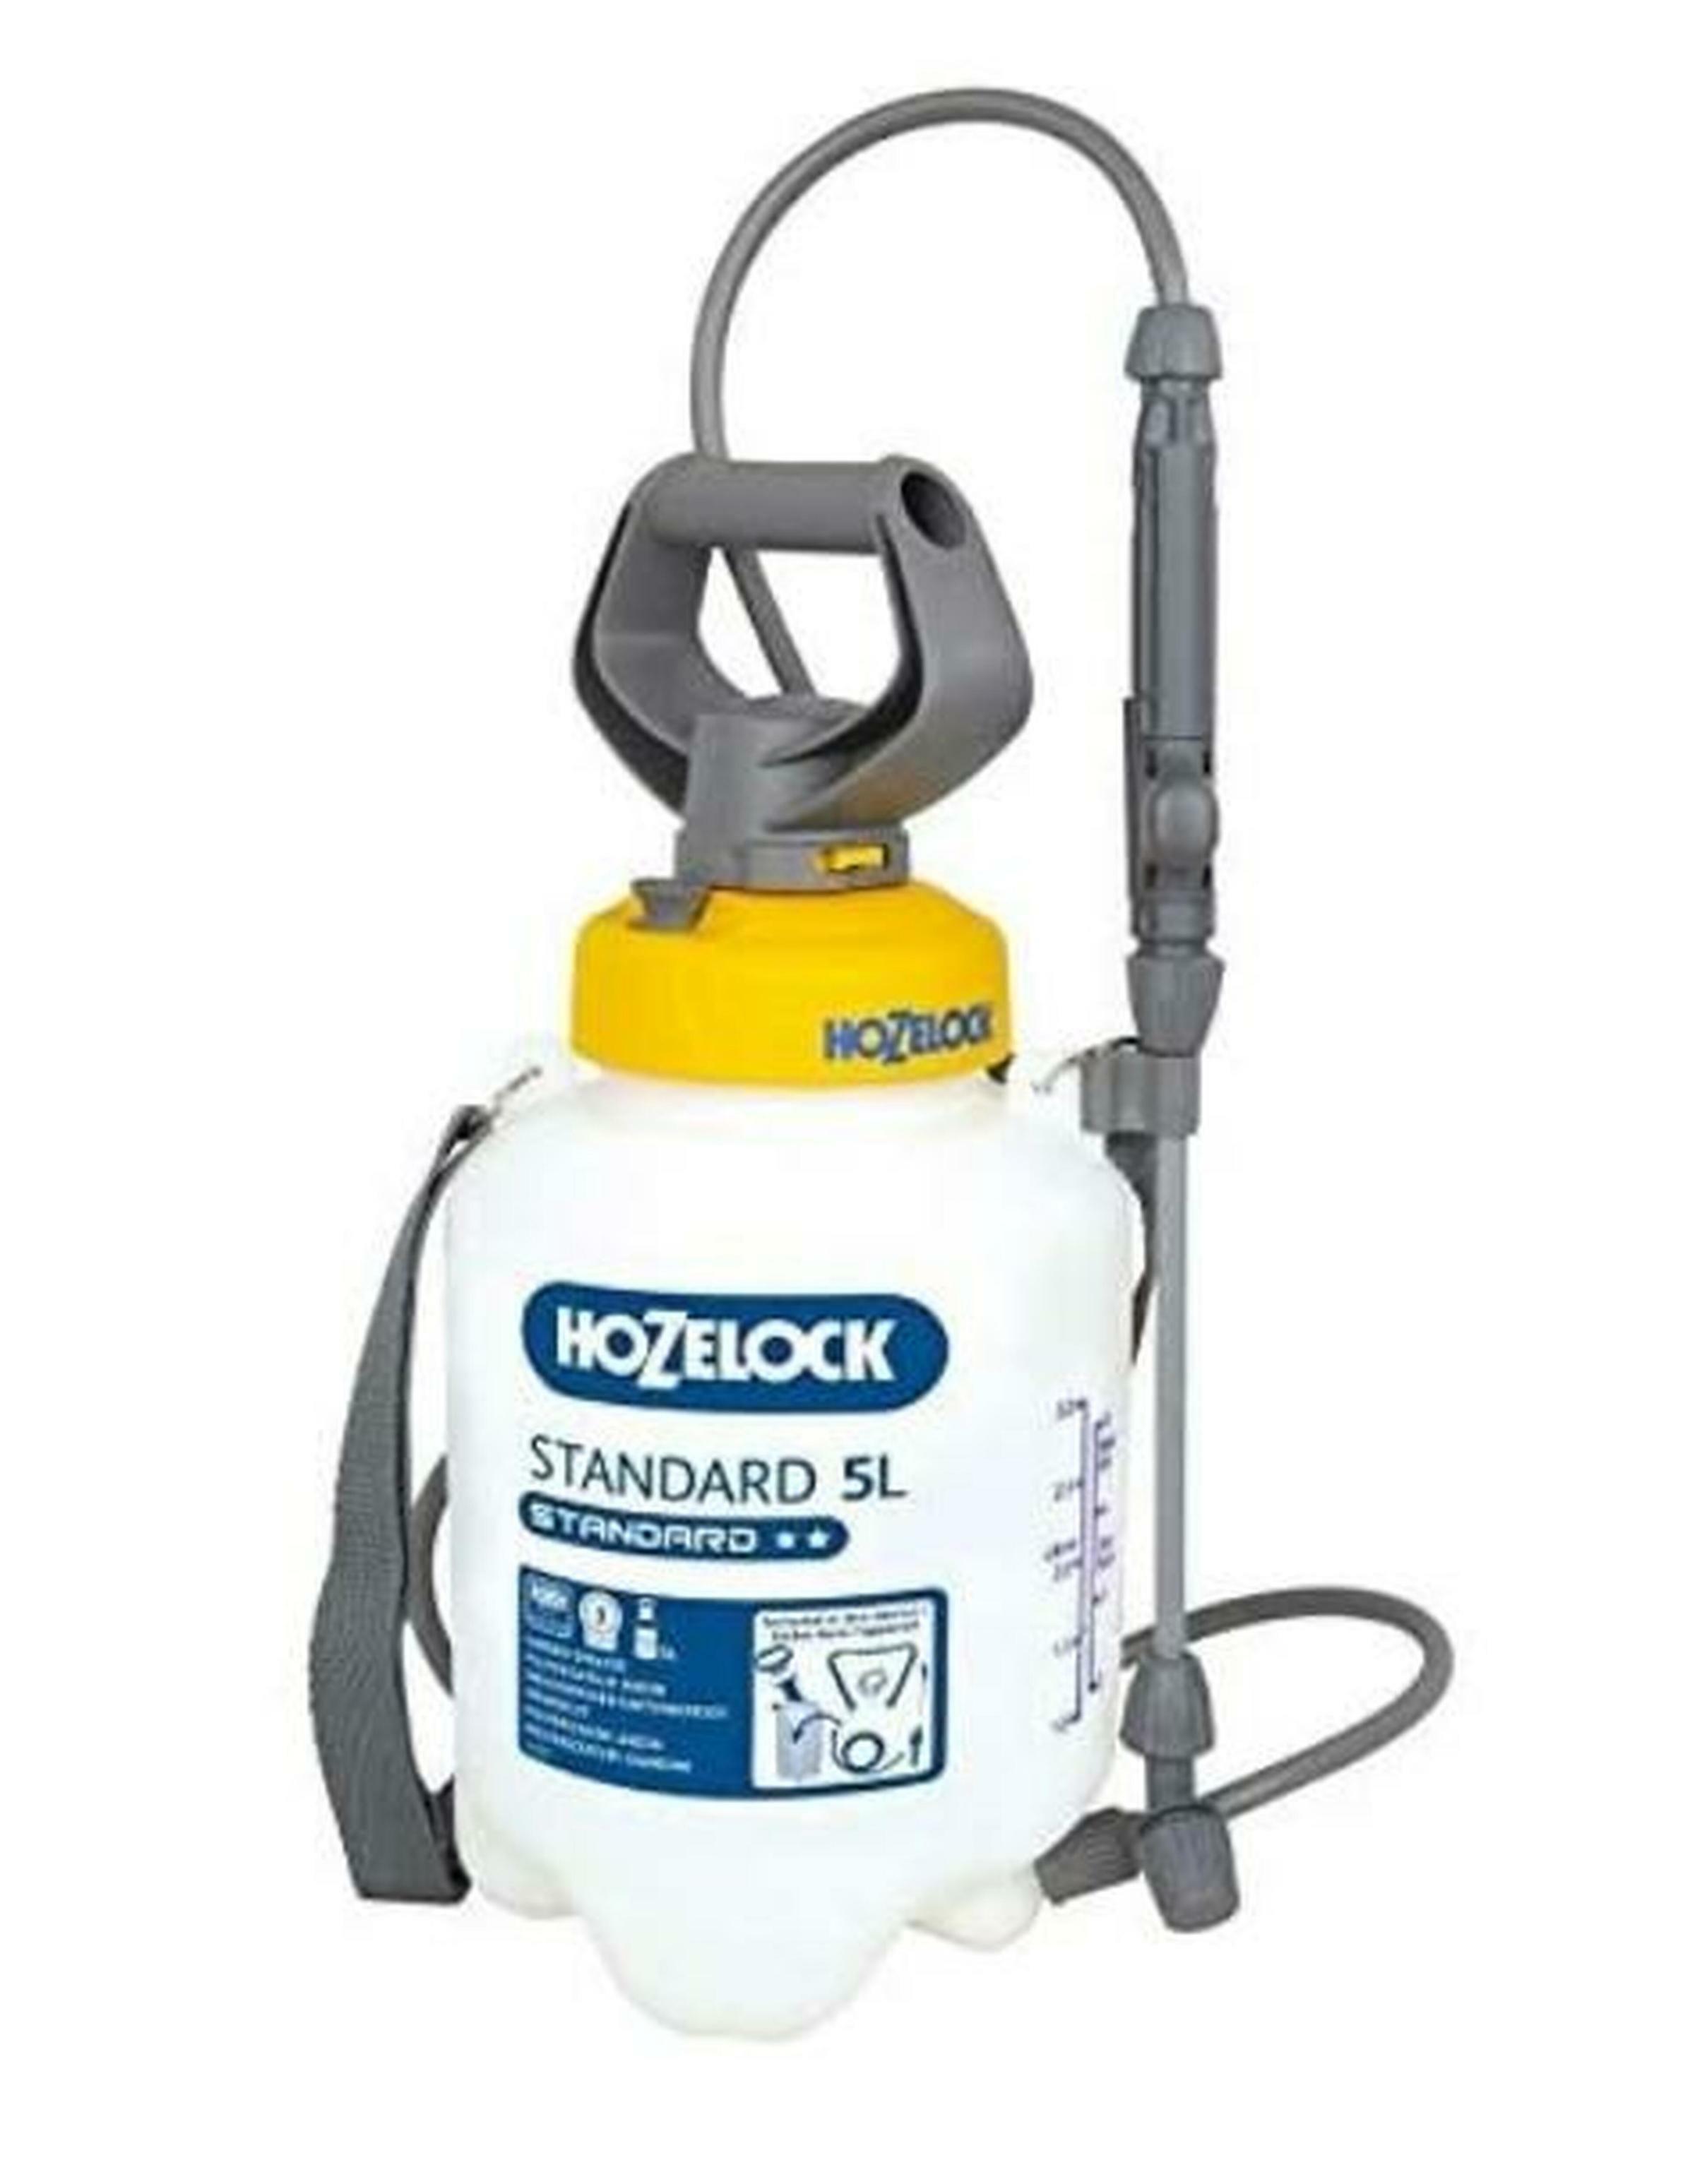 Hozelock Standard 5L Pressure Sprayer 4230 Weedkiller Cone 5010646062626 Ftb6179 38381 1612744573